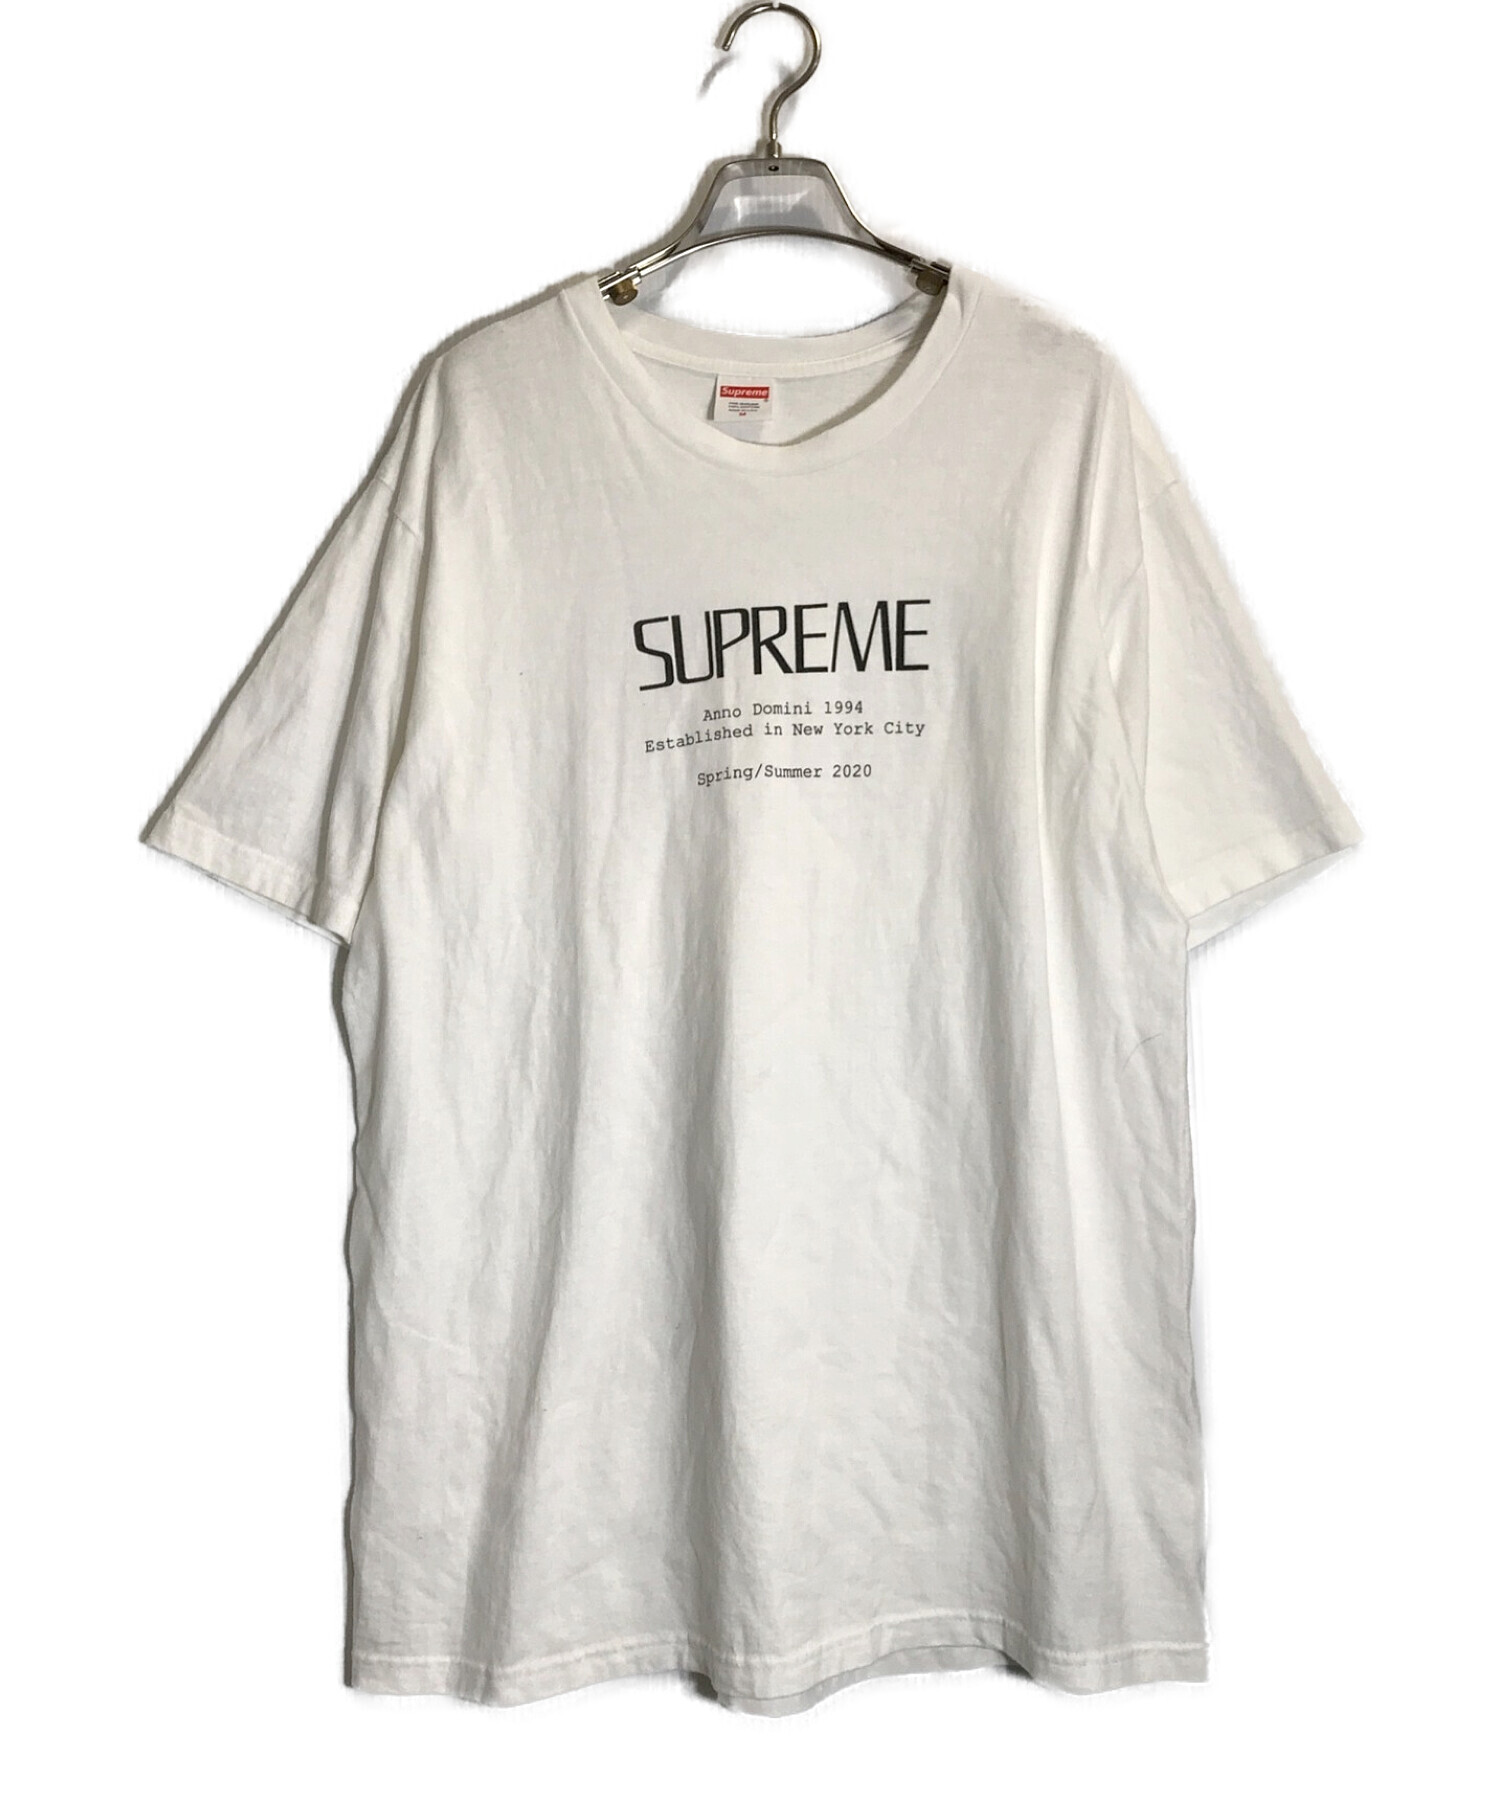 SUPREME (シュプリーム) anno domini tee/アンノドミニtシャツ ホワイト サイズ:M